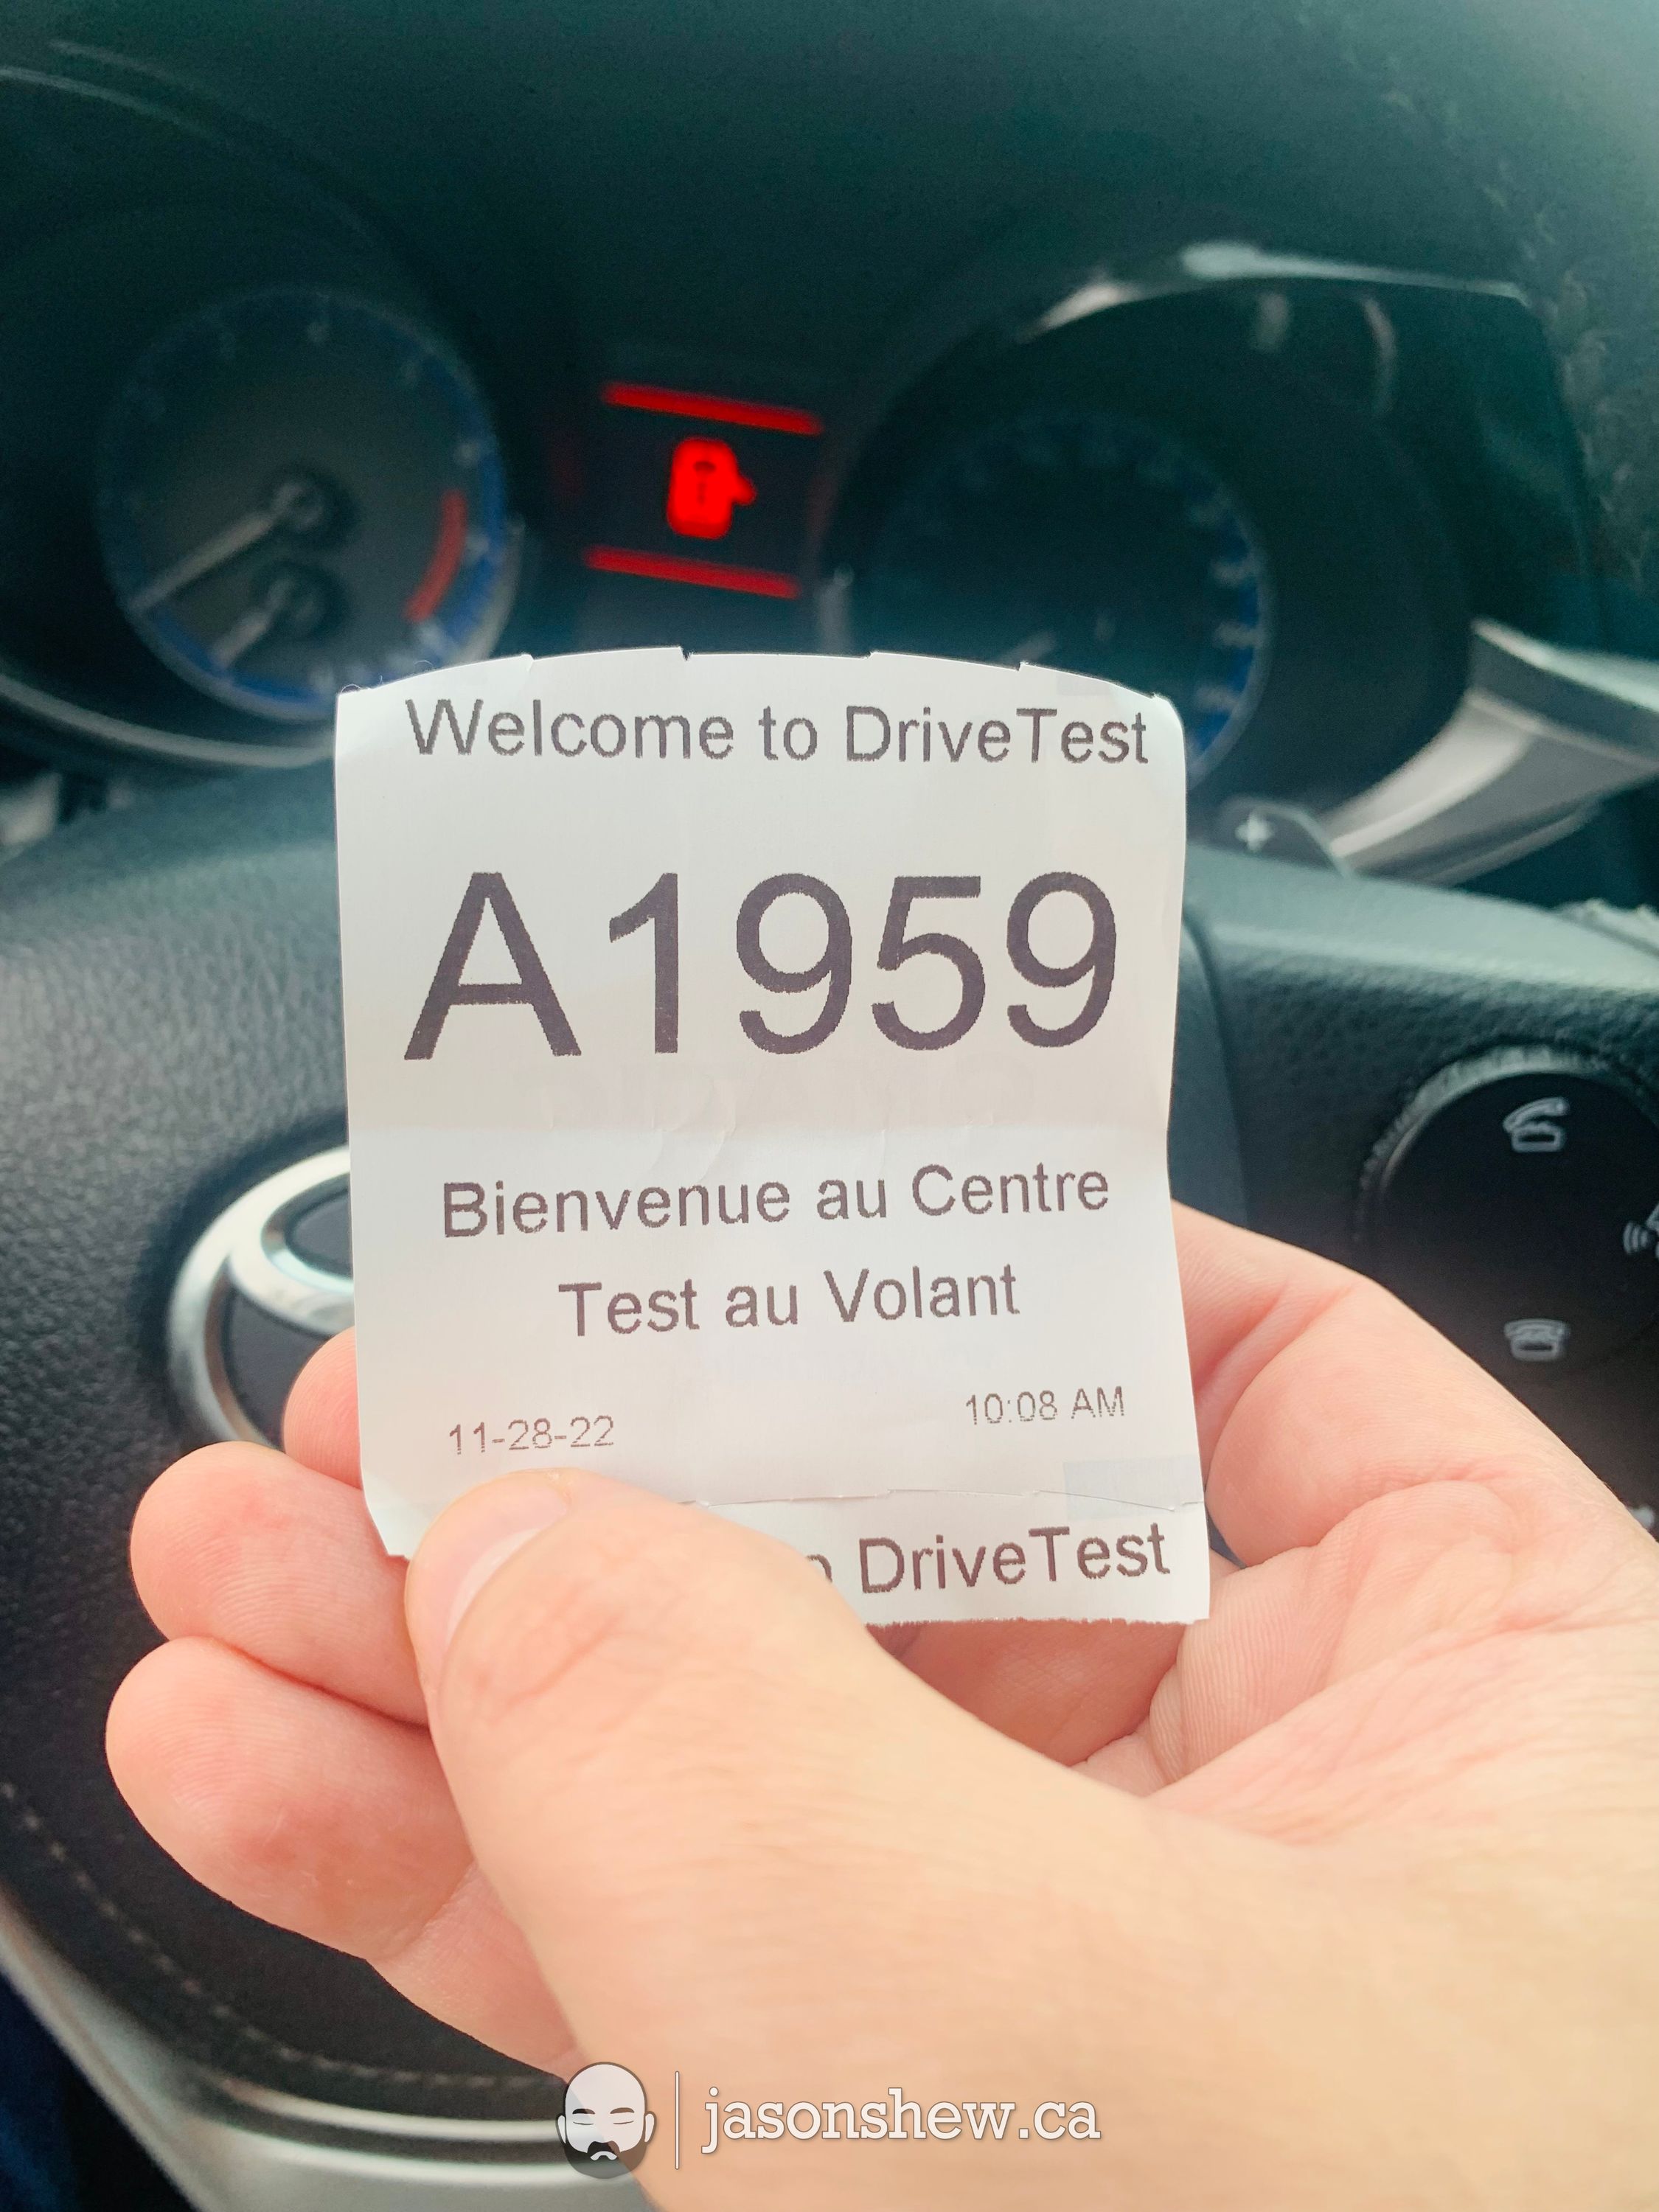 DriveTest Check-in